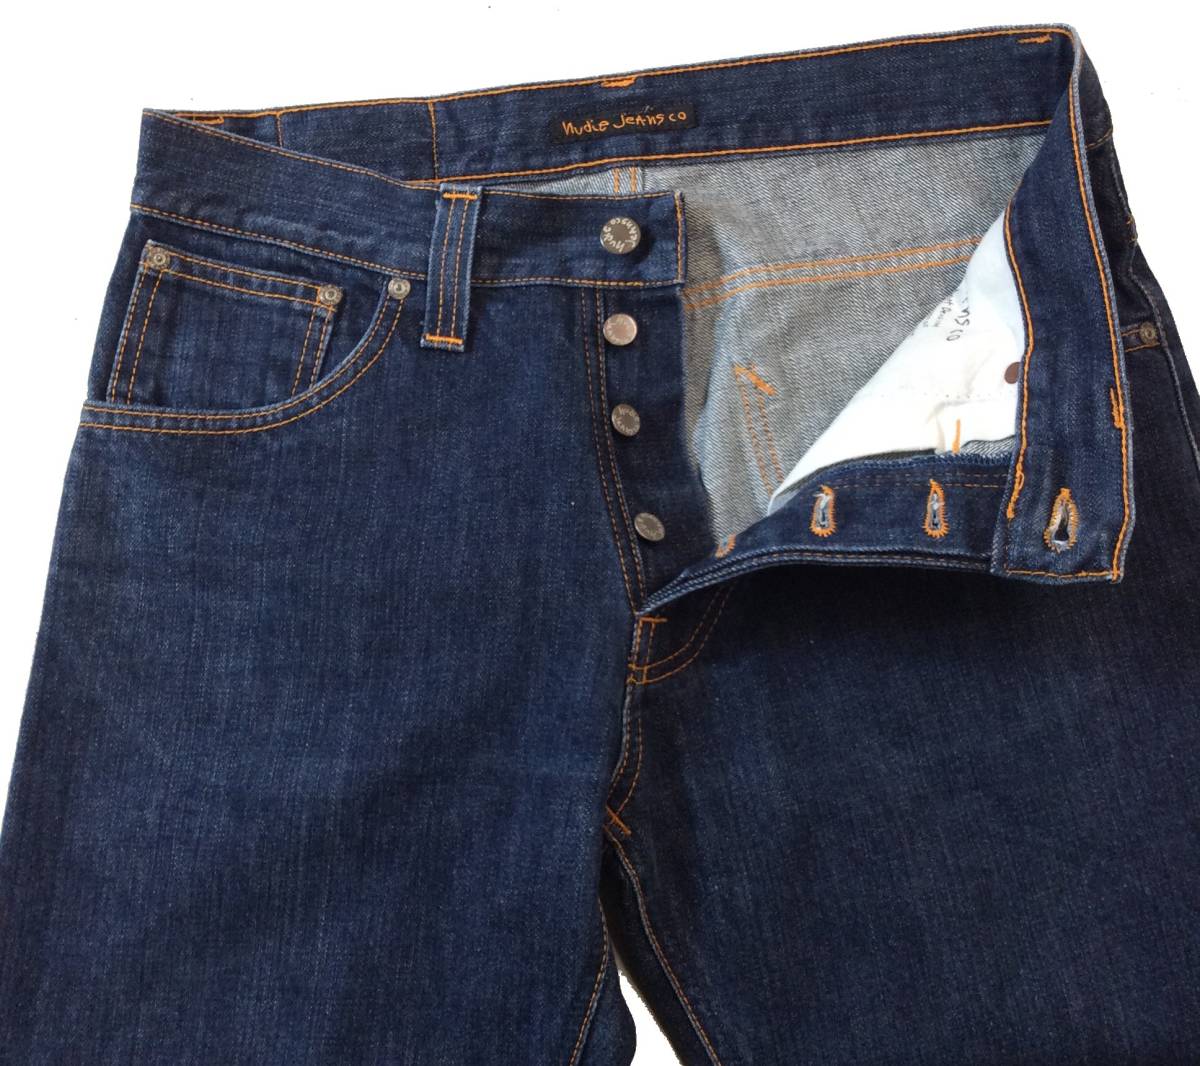 nudie jeans ヌーディージーンズ ITALY製 AVERAGE JOE デニムパンツ ジーンズ DRY HEAVY W32 ユニセックス メンズ レディース _画像3